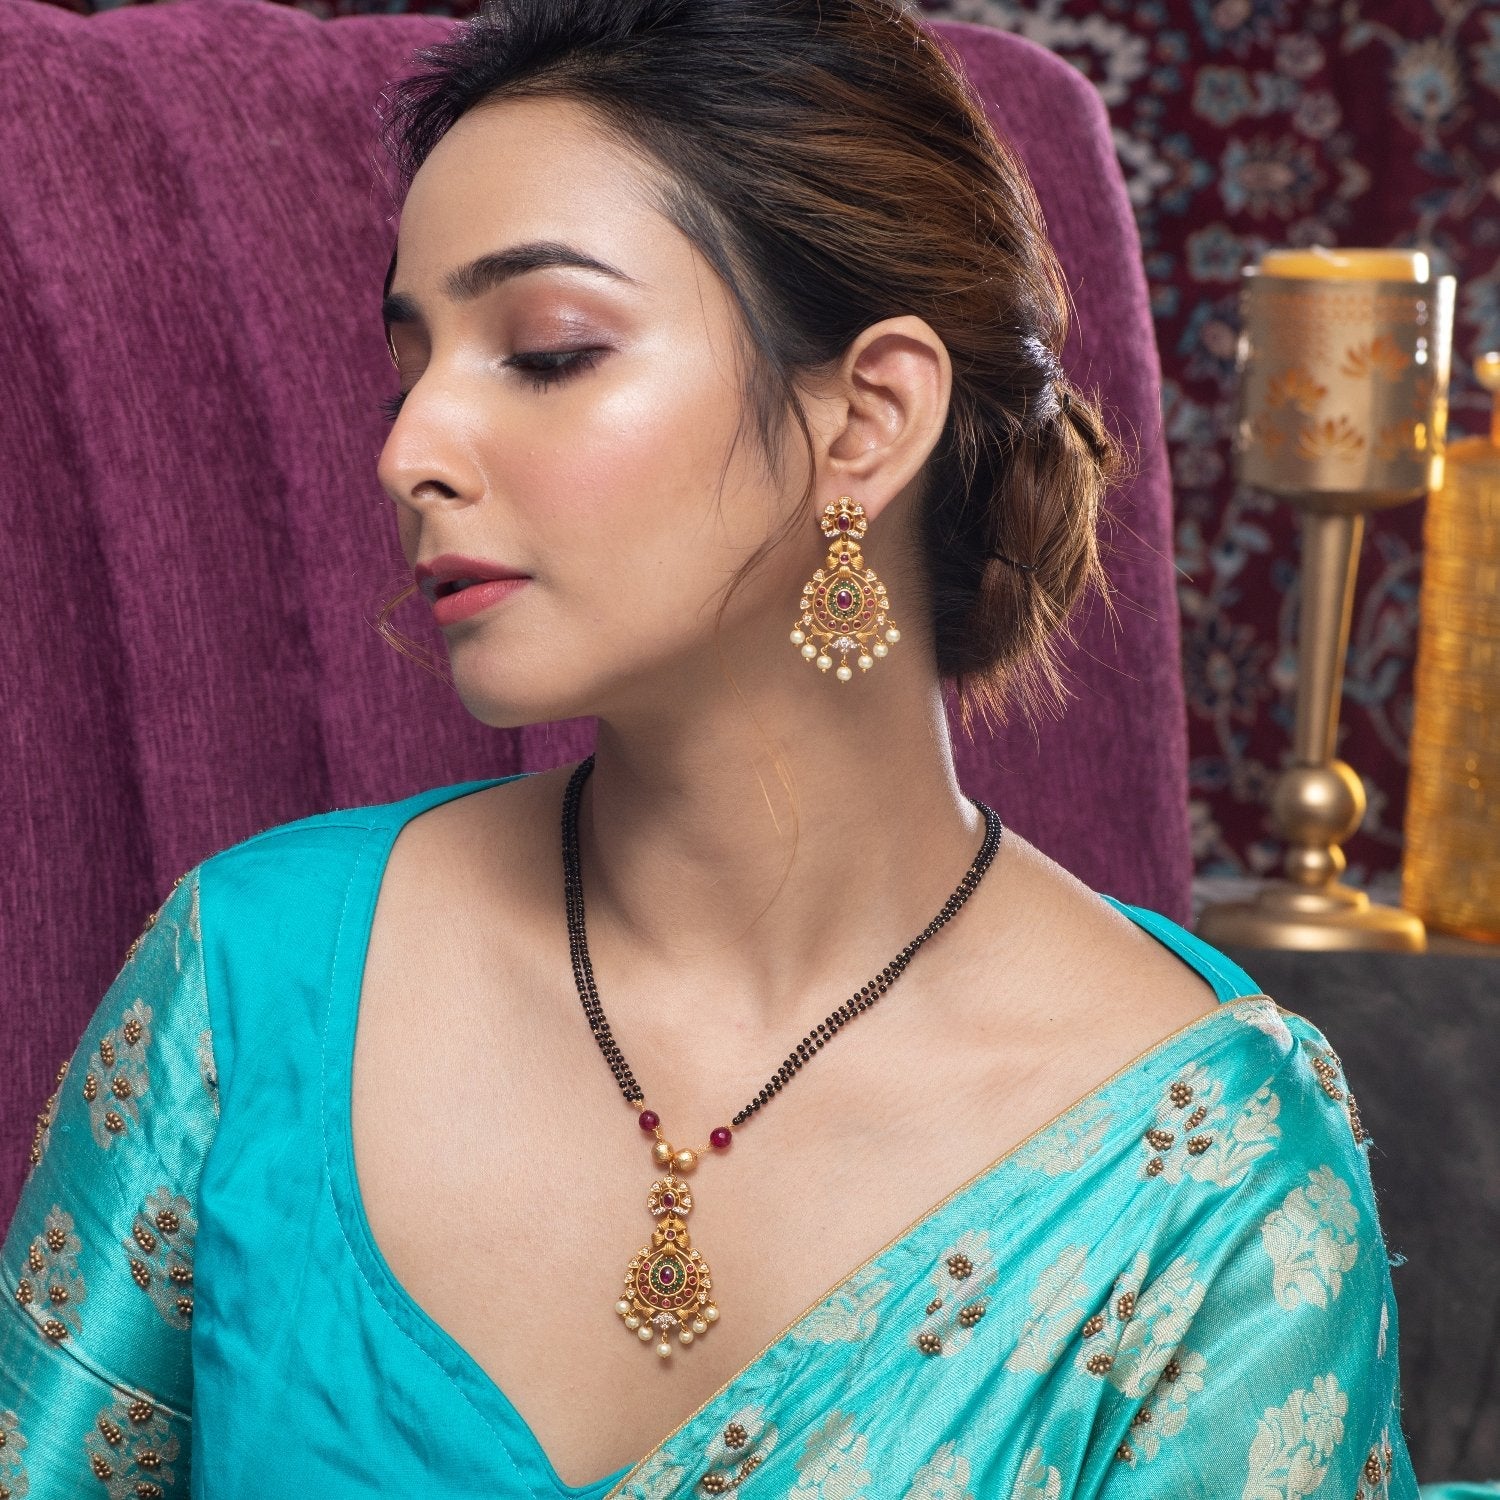 Pooja Bangles Gold Plated Kundan Stone & Beads Necklace Set